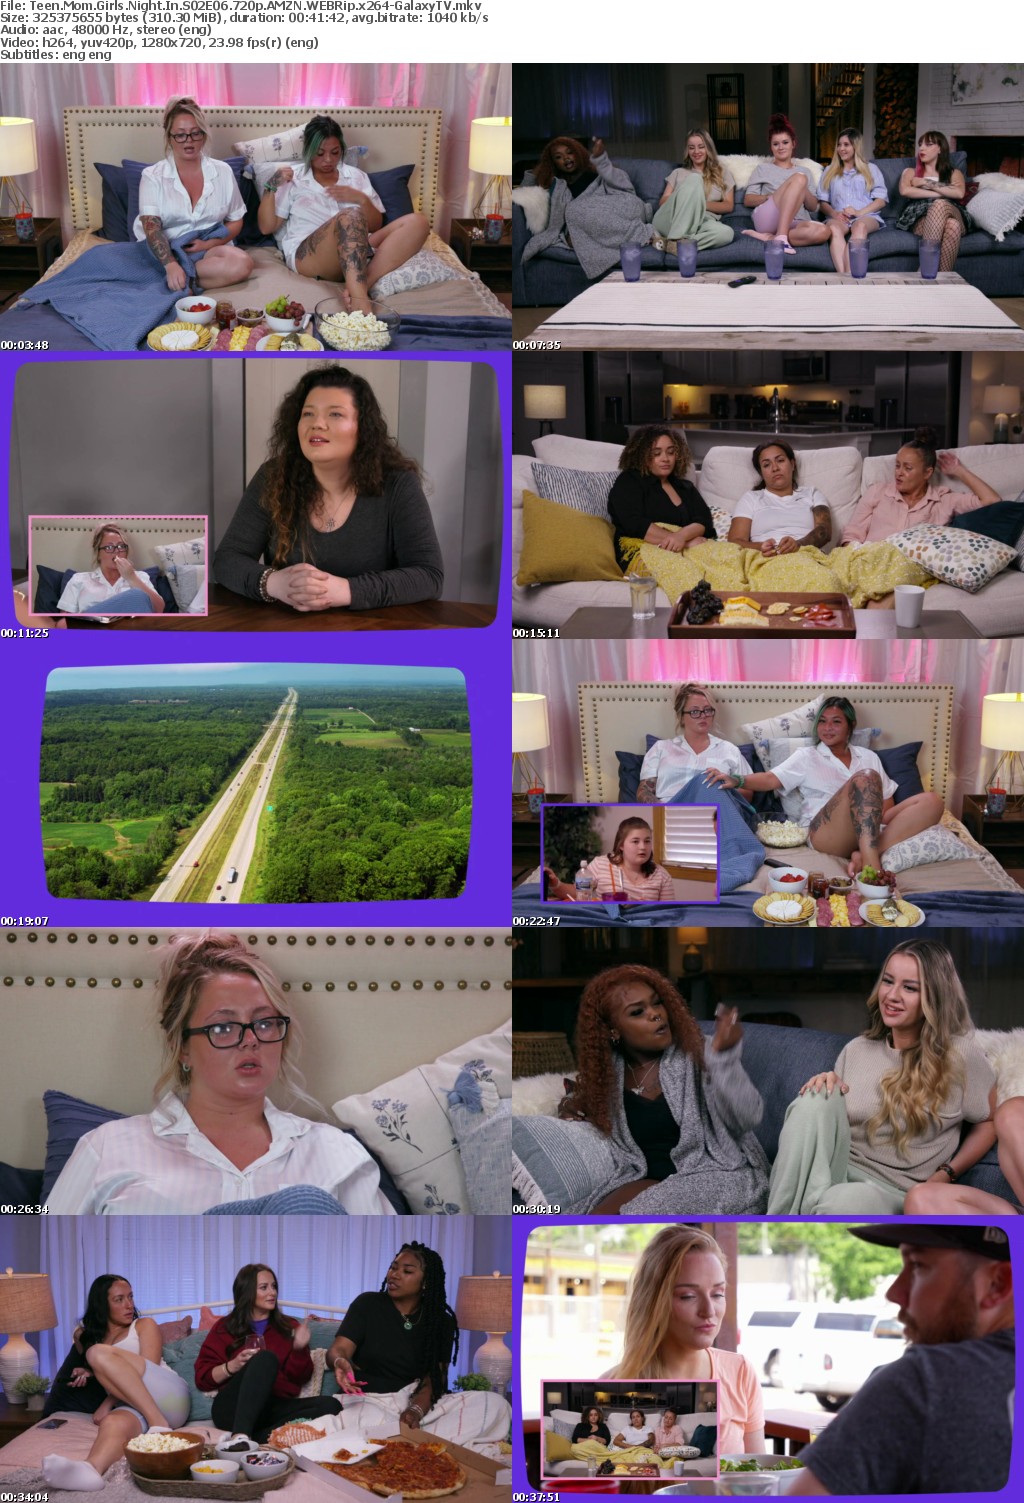 Teen Mom Girls Night In S02 COMPLETE 720p AMZN WEBRip x264-GalaxyTV